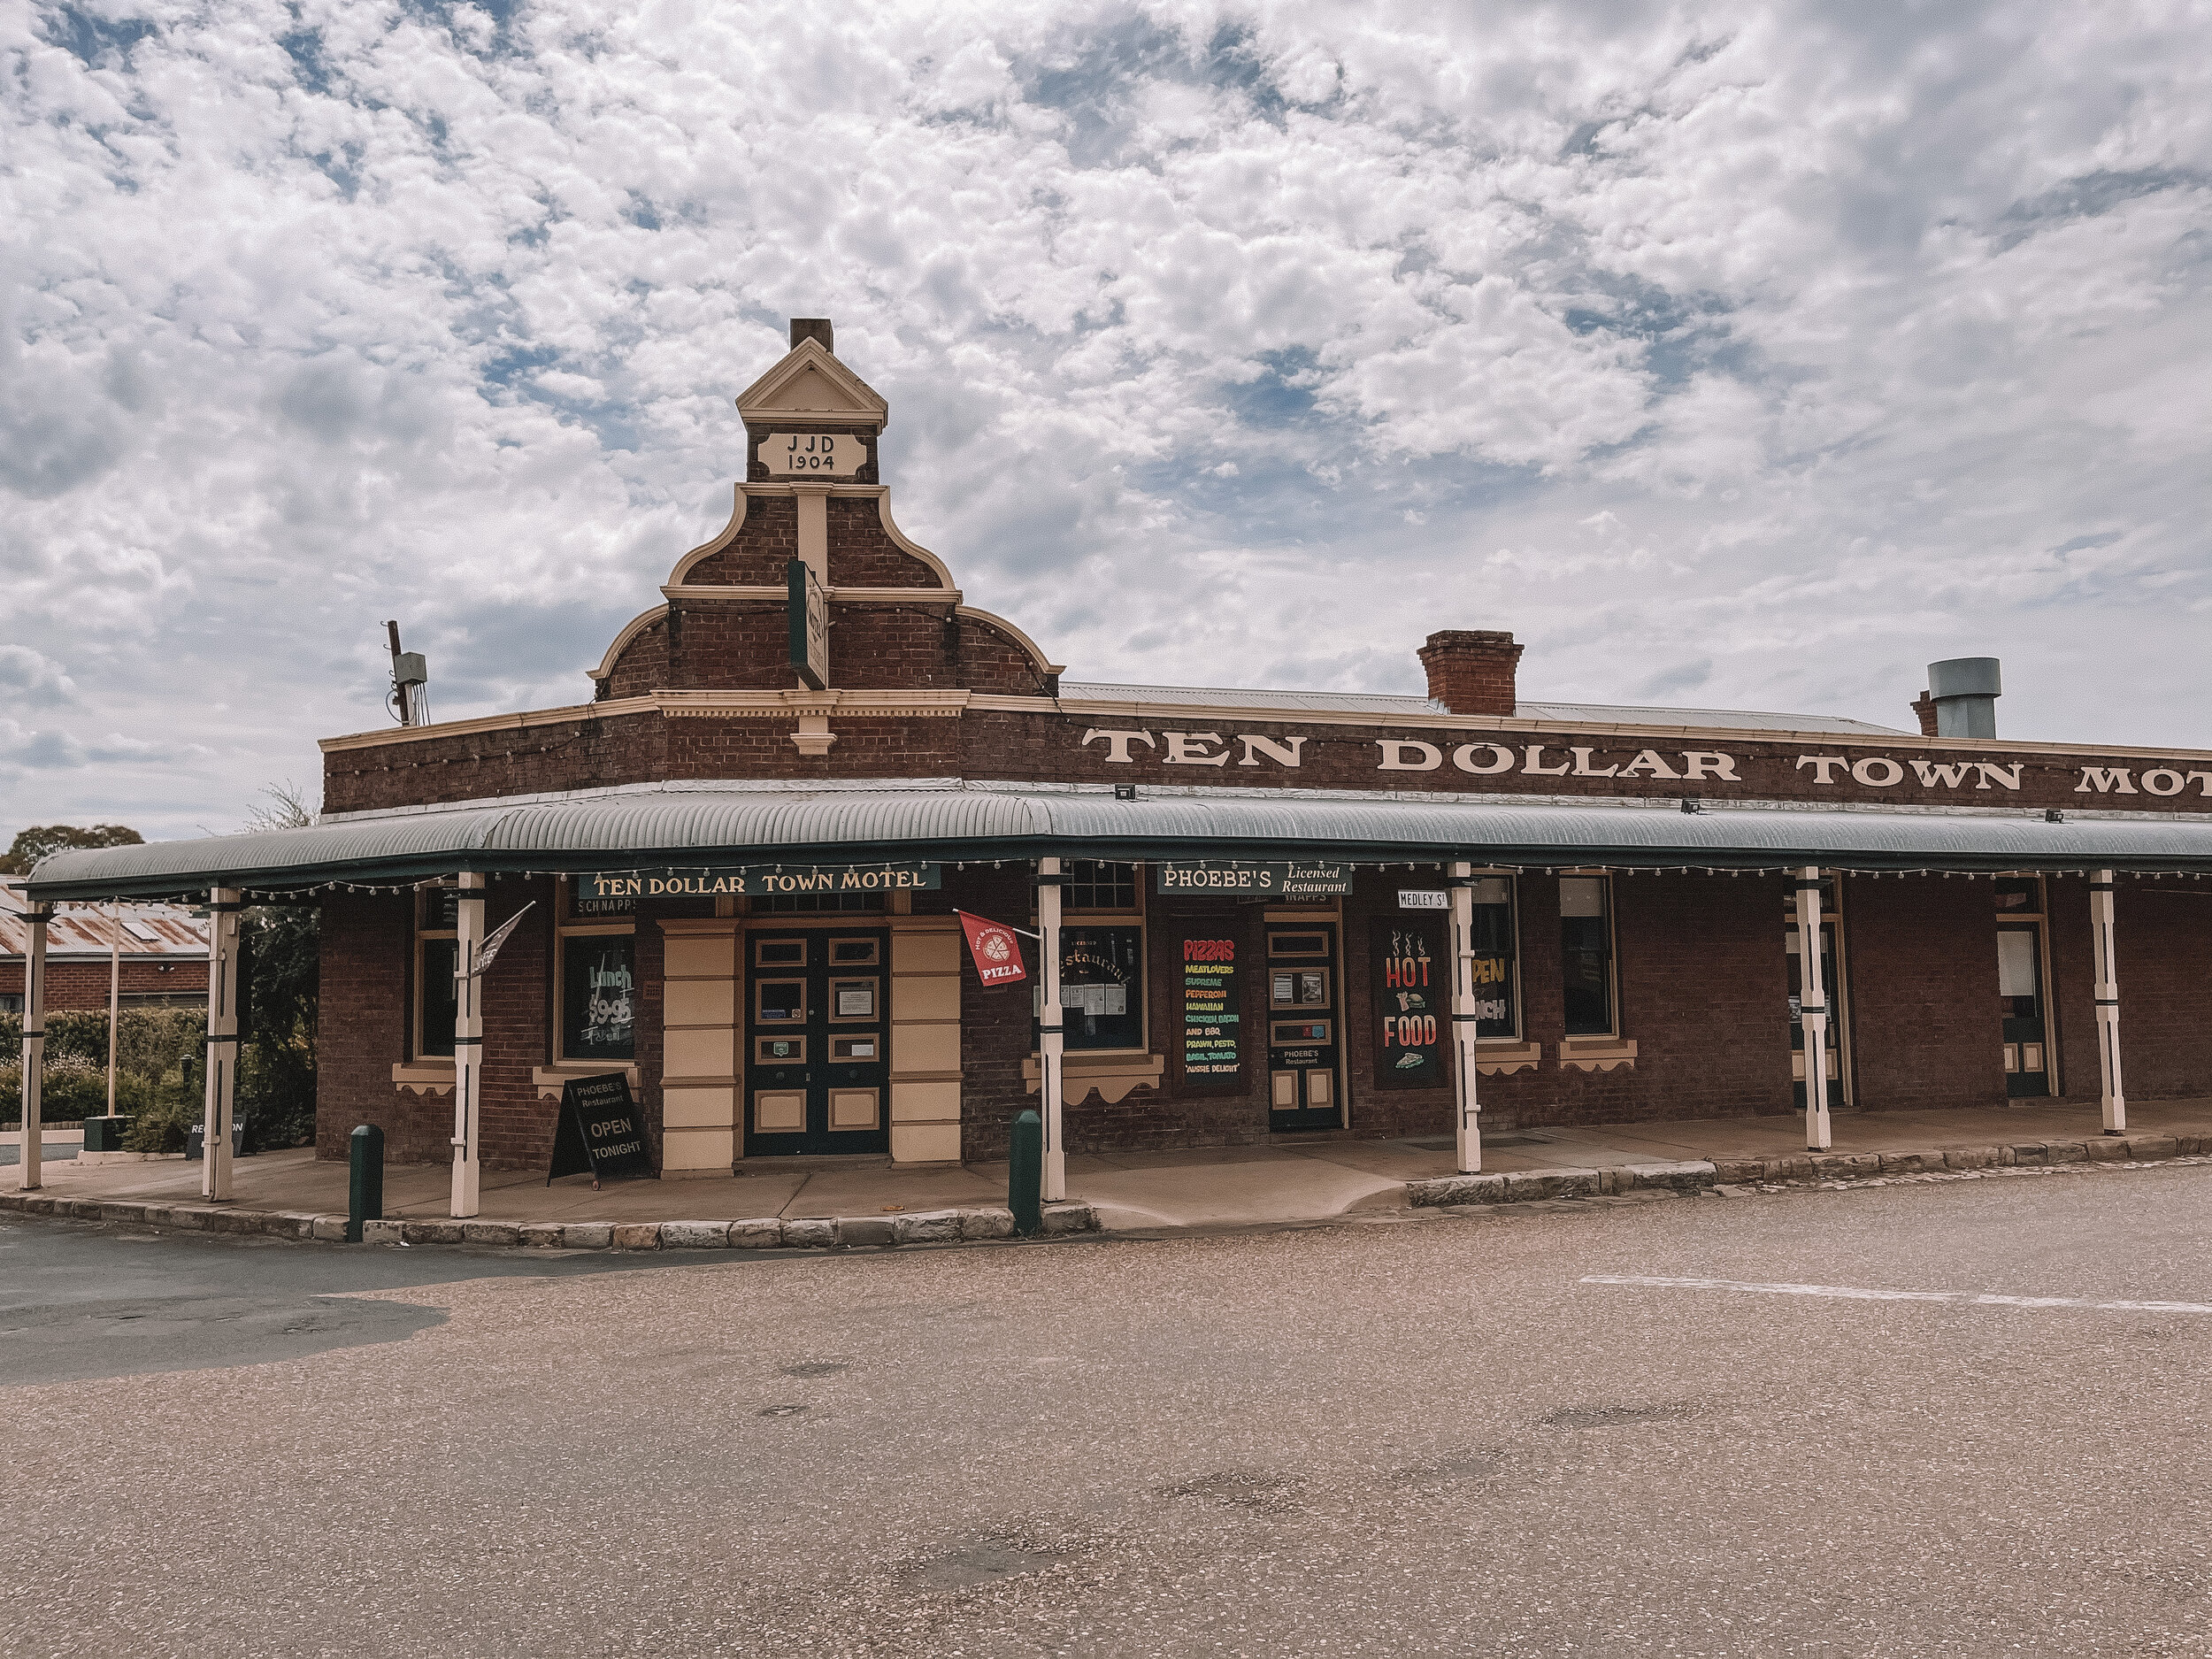 Ten Dollar Town Motel - Gulgong - New South Wales (NSW) - Australia